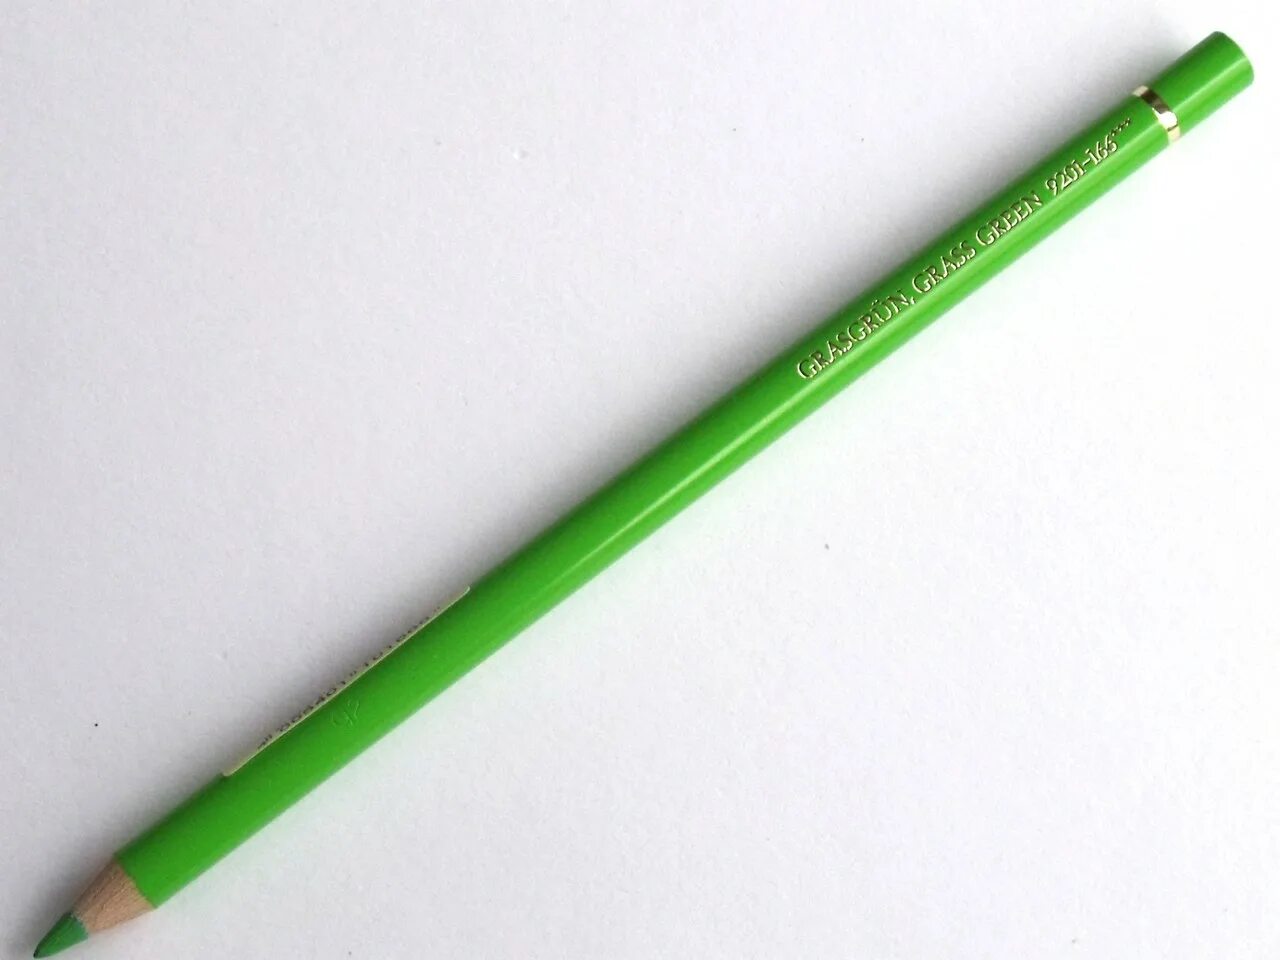 Купить зеленый карандаш. Карандаши Фабер Кастелл зеленые. Карандаш зеленого цвета. Зеленый карандаш для детей. Предметы зеленого карандаш цвета.